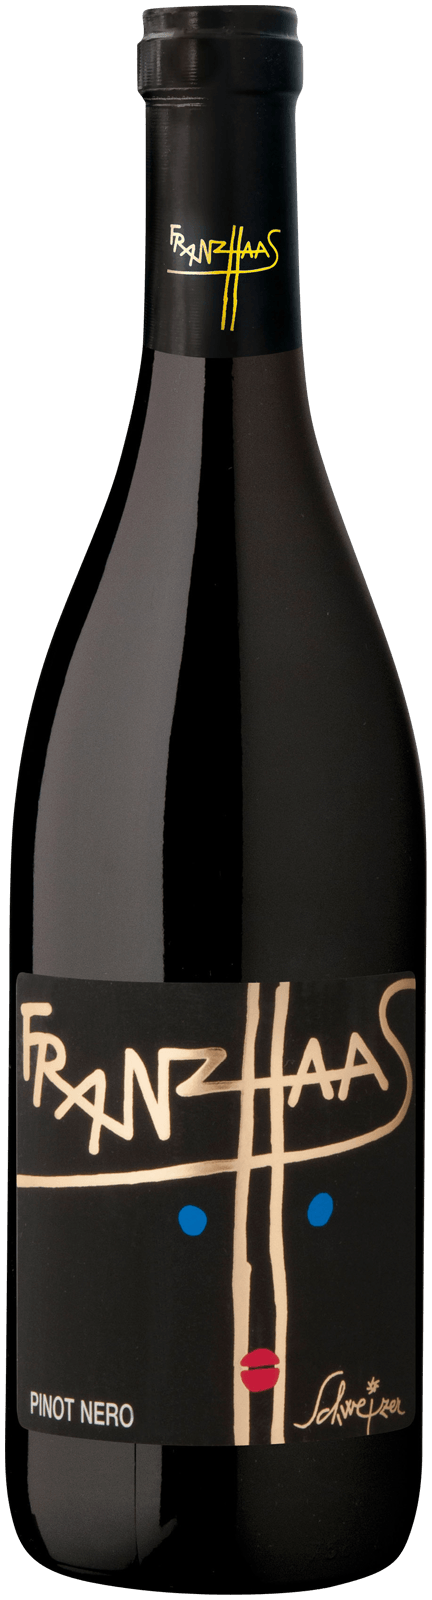 Franz Haas - Franz Haas - Pinot Nero (Schweizer) Alto Adige 2019 - Buy Red Online Hong Kong - Cheese Meets Wine